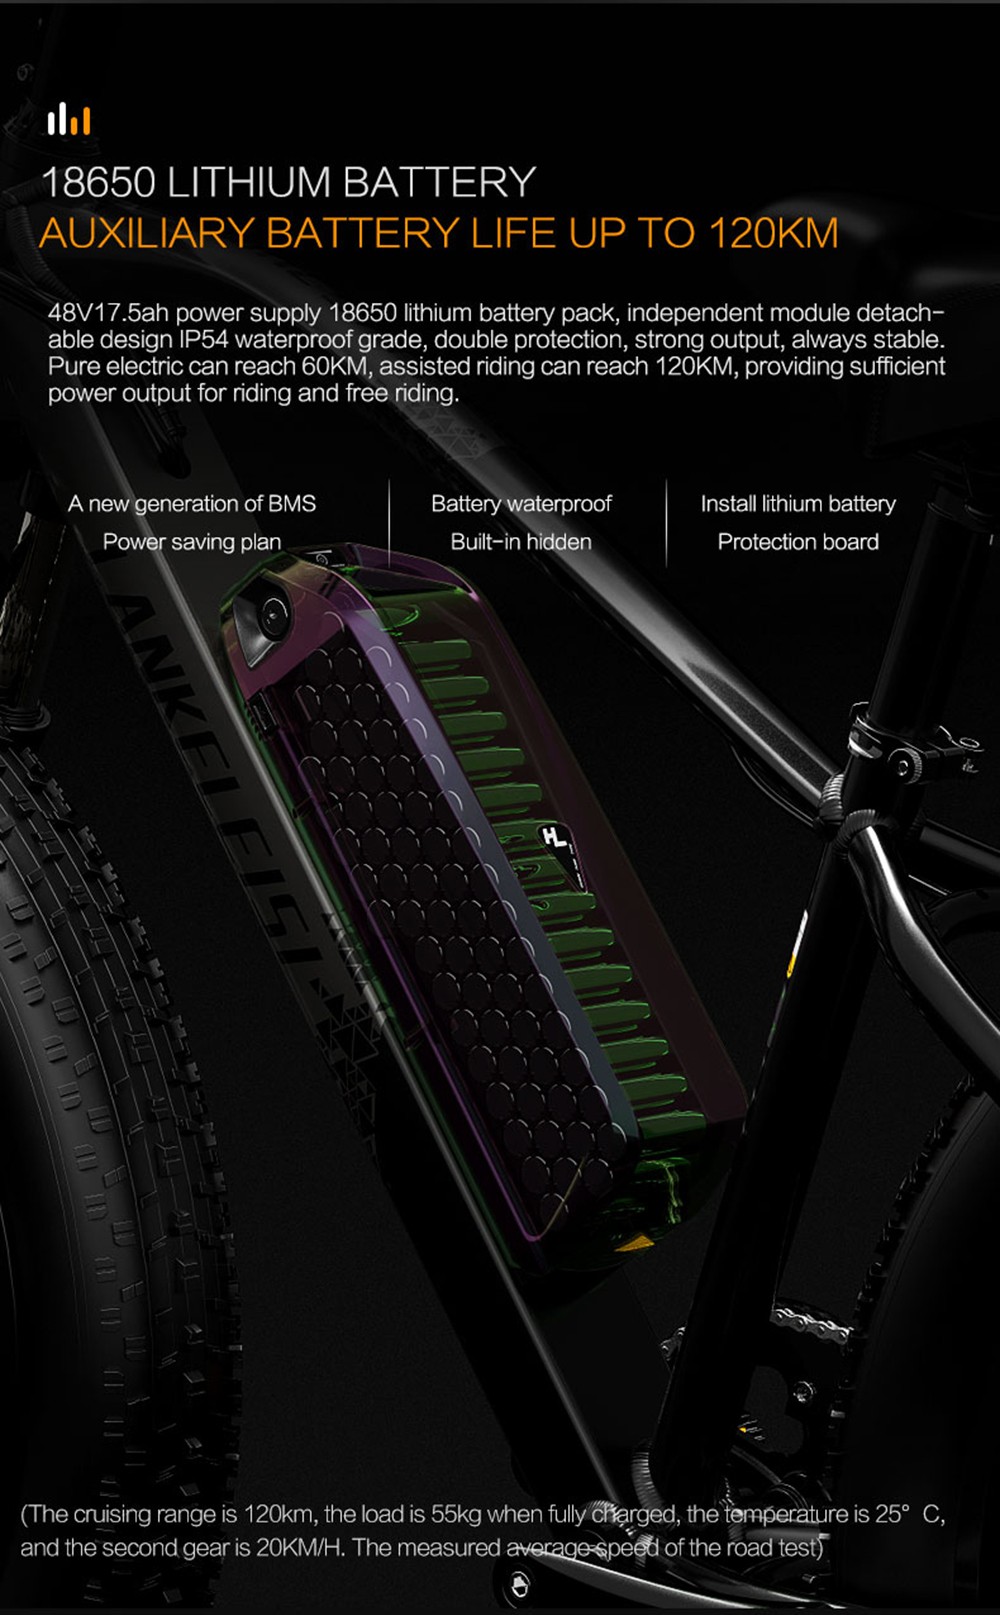 LANKELEISI MG740 PLUS Electric Bike 26*4.0'' Tires 1000W*2 Dual Motor 17.5Ah Battery 49km/h Max Speed - Black & Grey